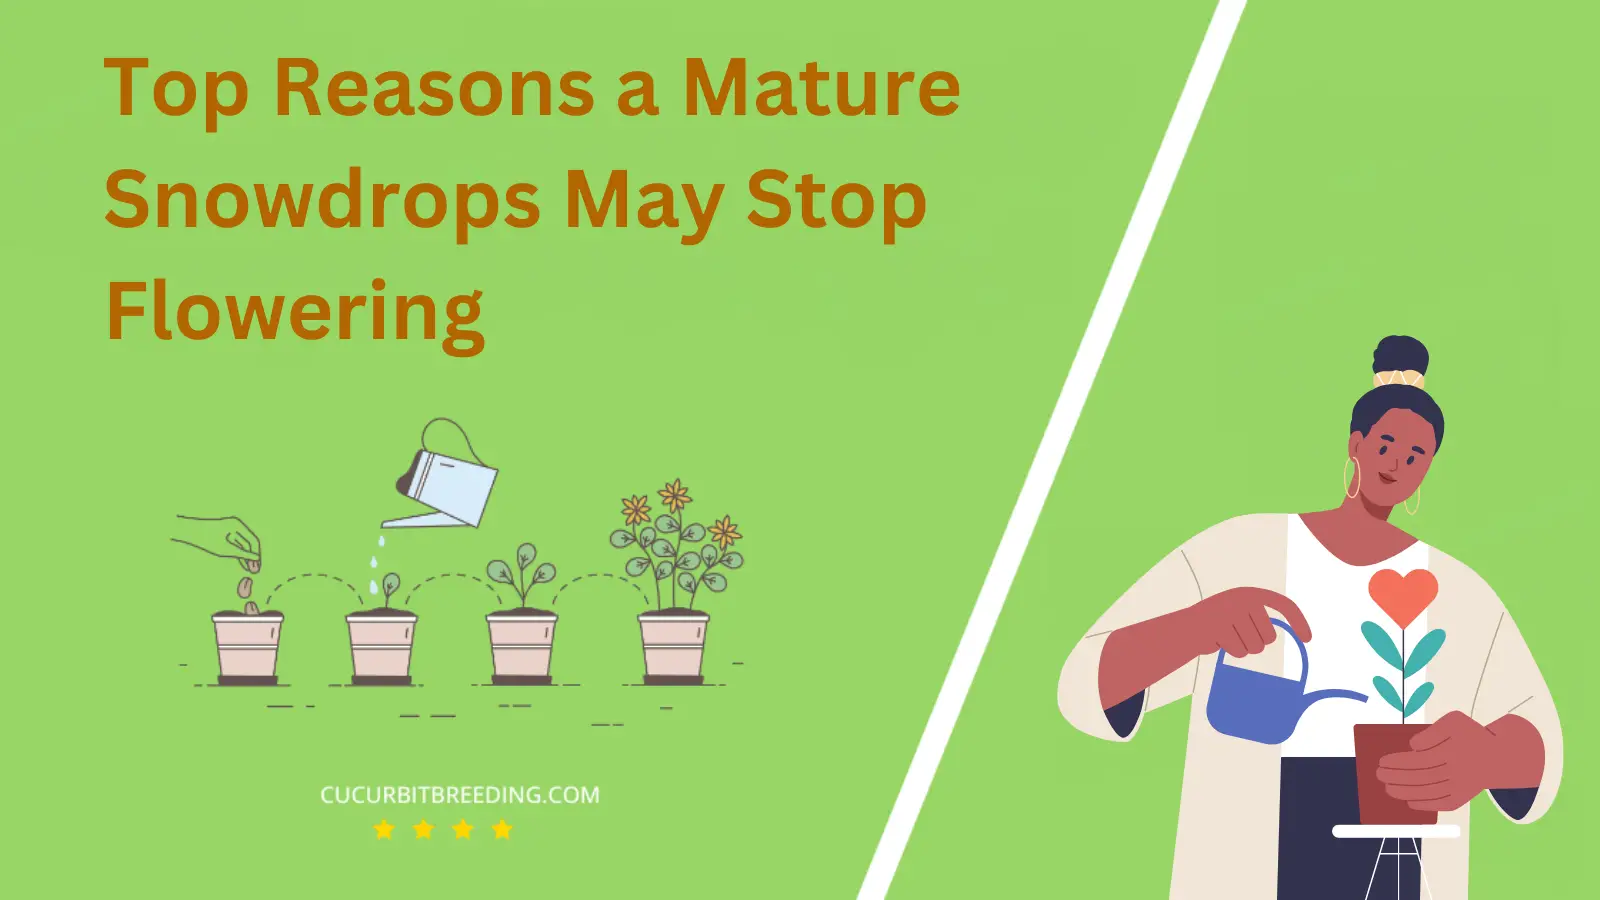 Top Reasons a Mature Snowdrops May Stop Flowering